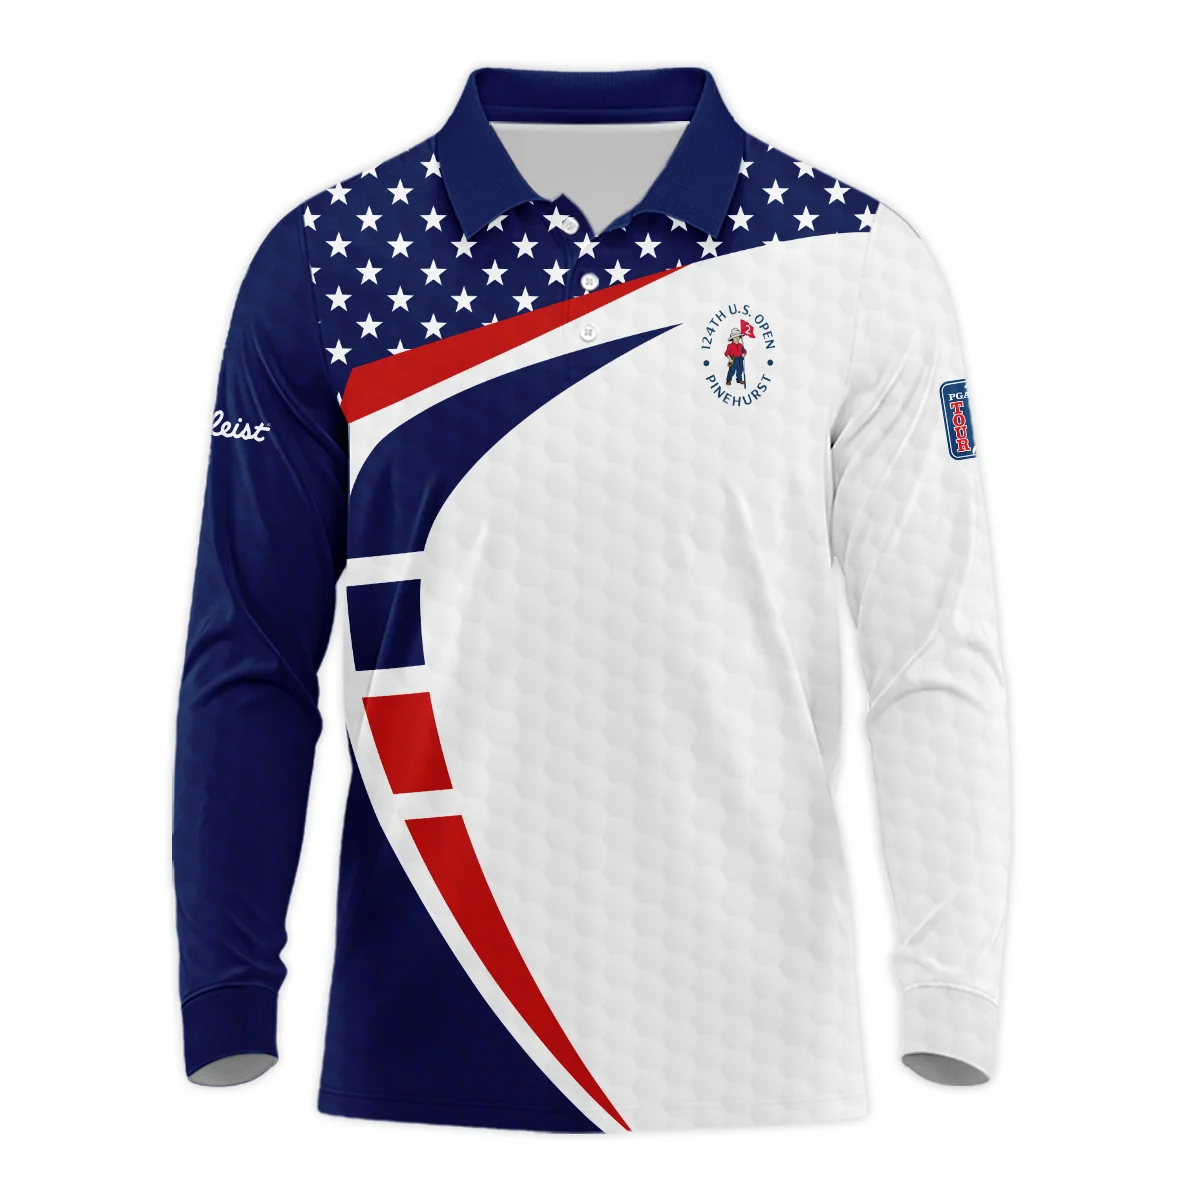 124th U.S. Open Pinehurst Titleist US Flag Blue Red Stars Vneck Polo Shirt Style Classic Polo Shirt For Men